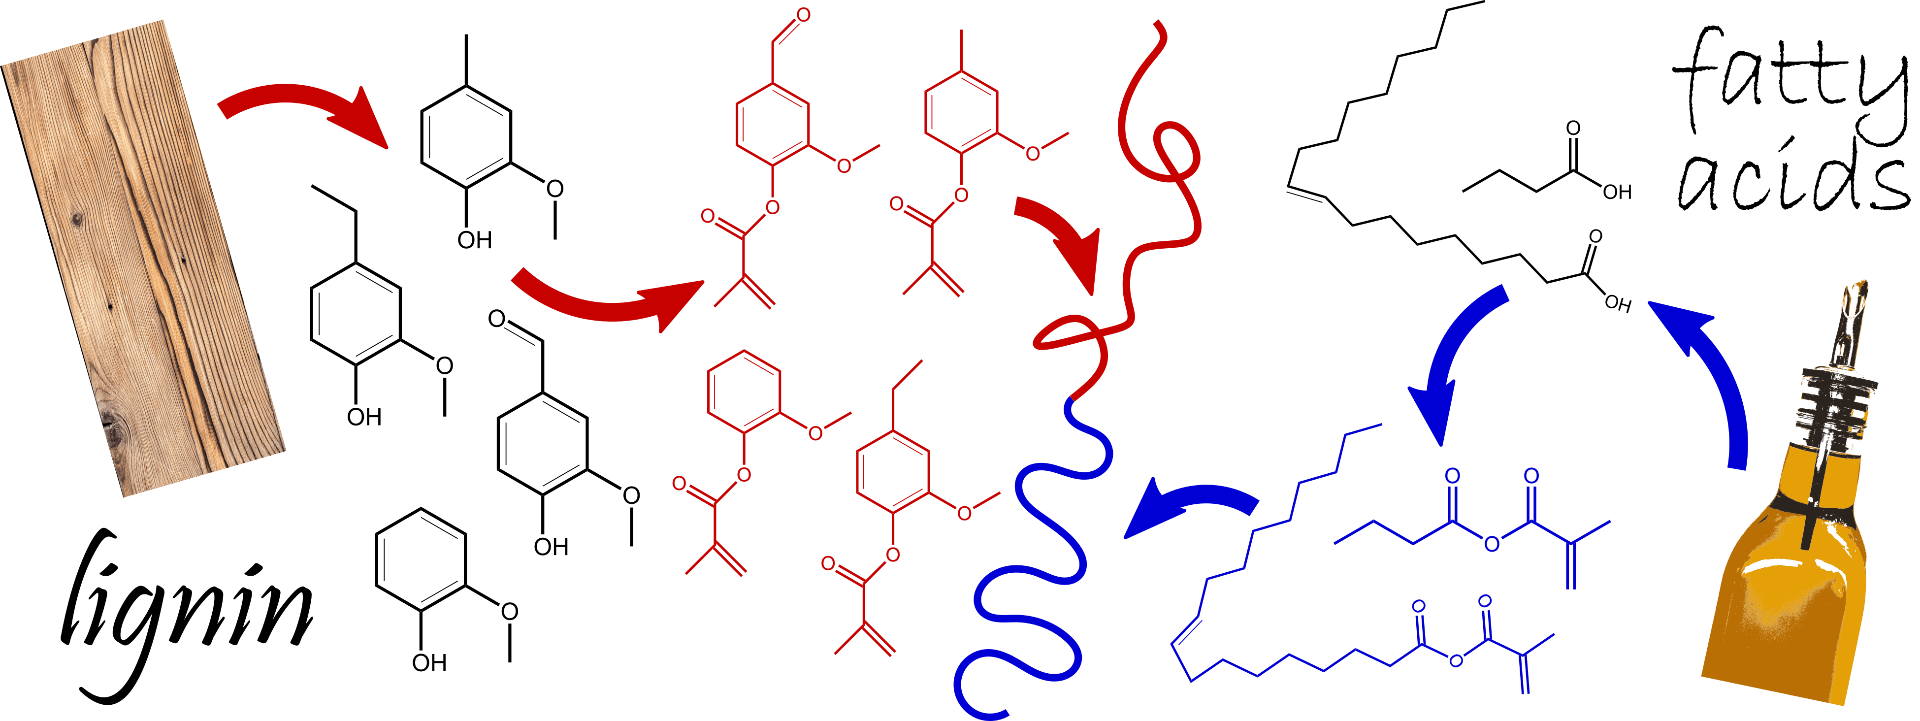 bio-polymers